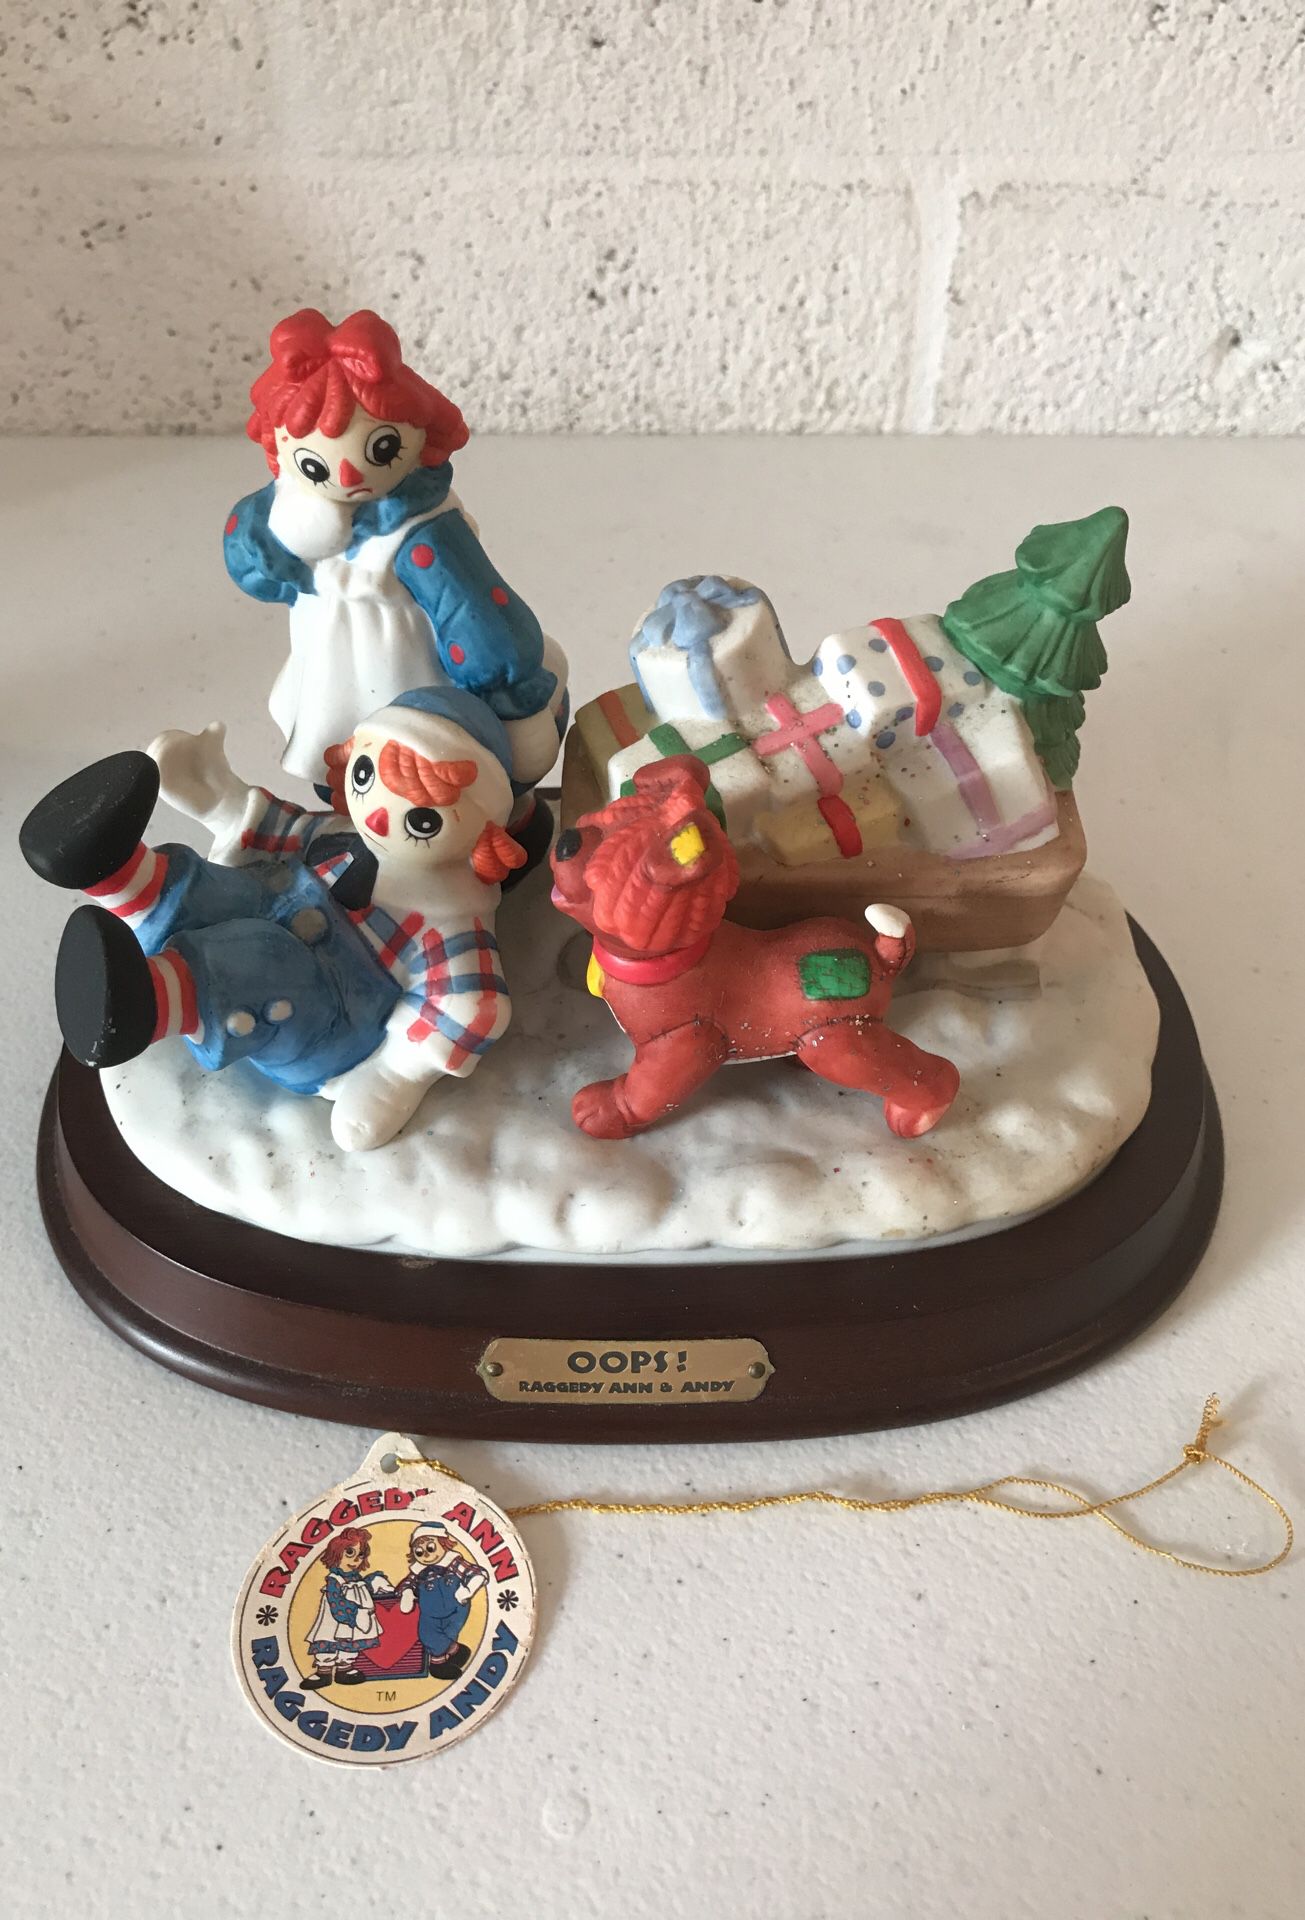 Raggedy Ann & Andy “Oops” flambro sledding figurine